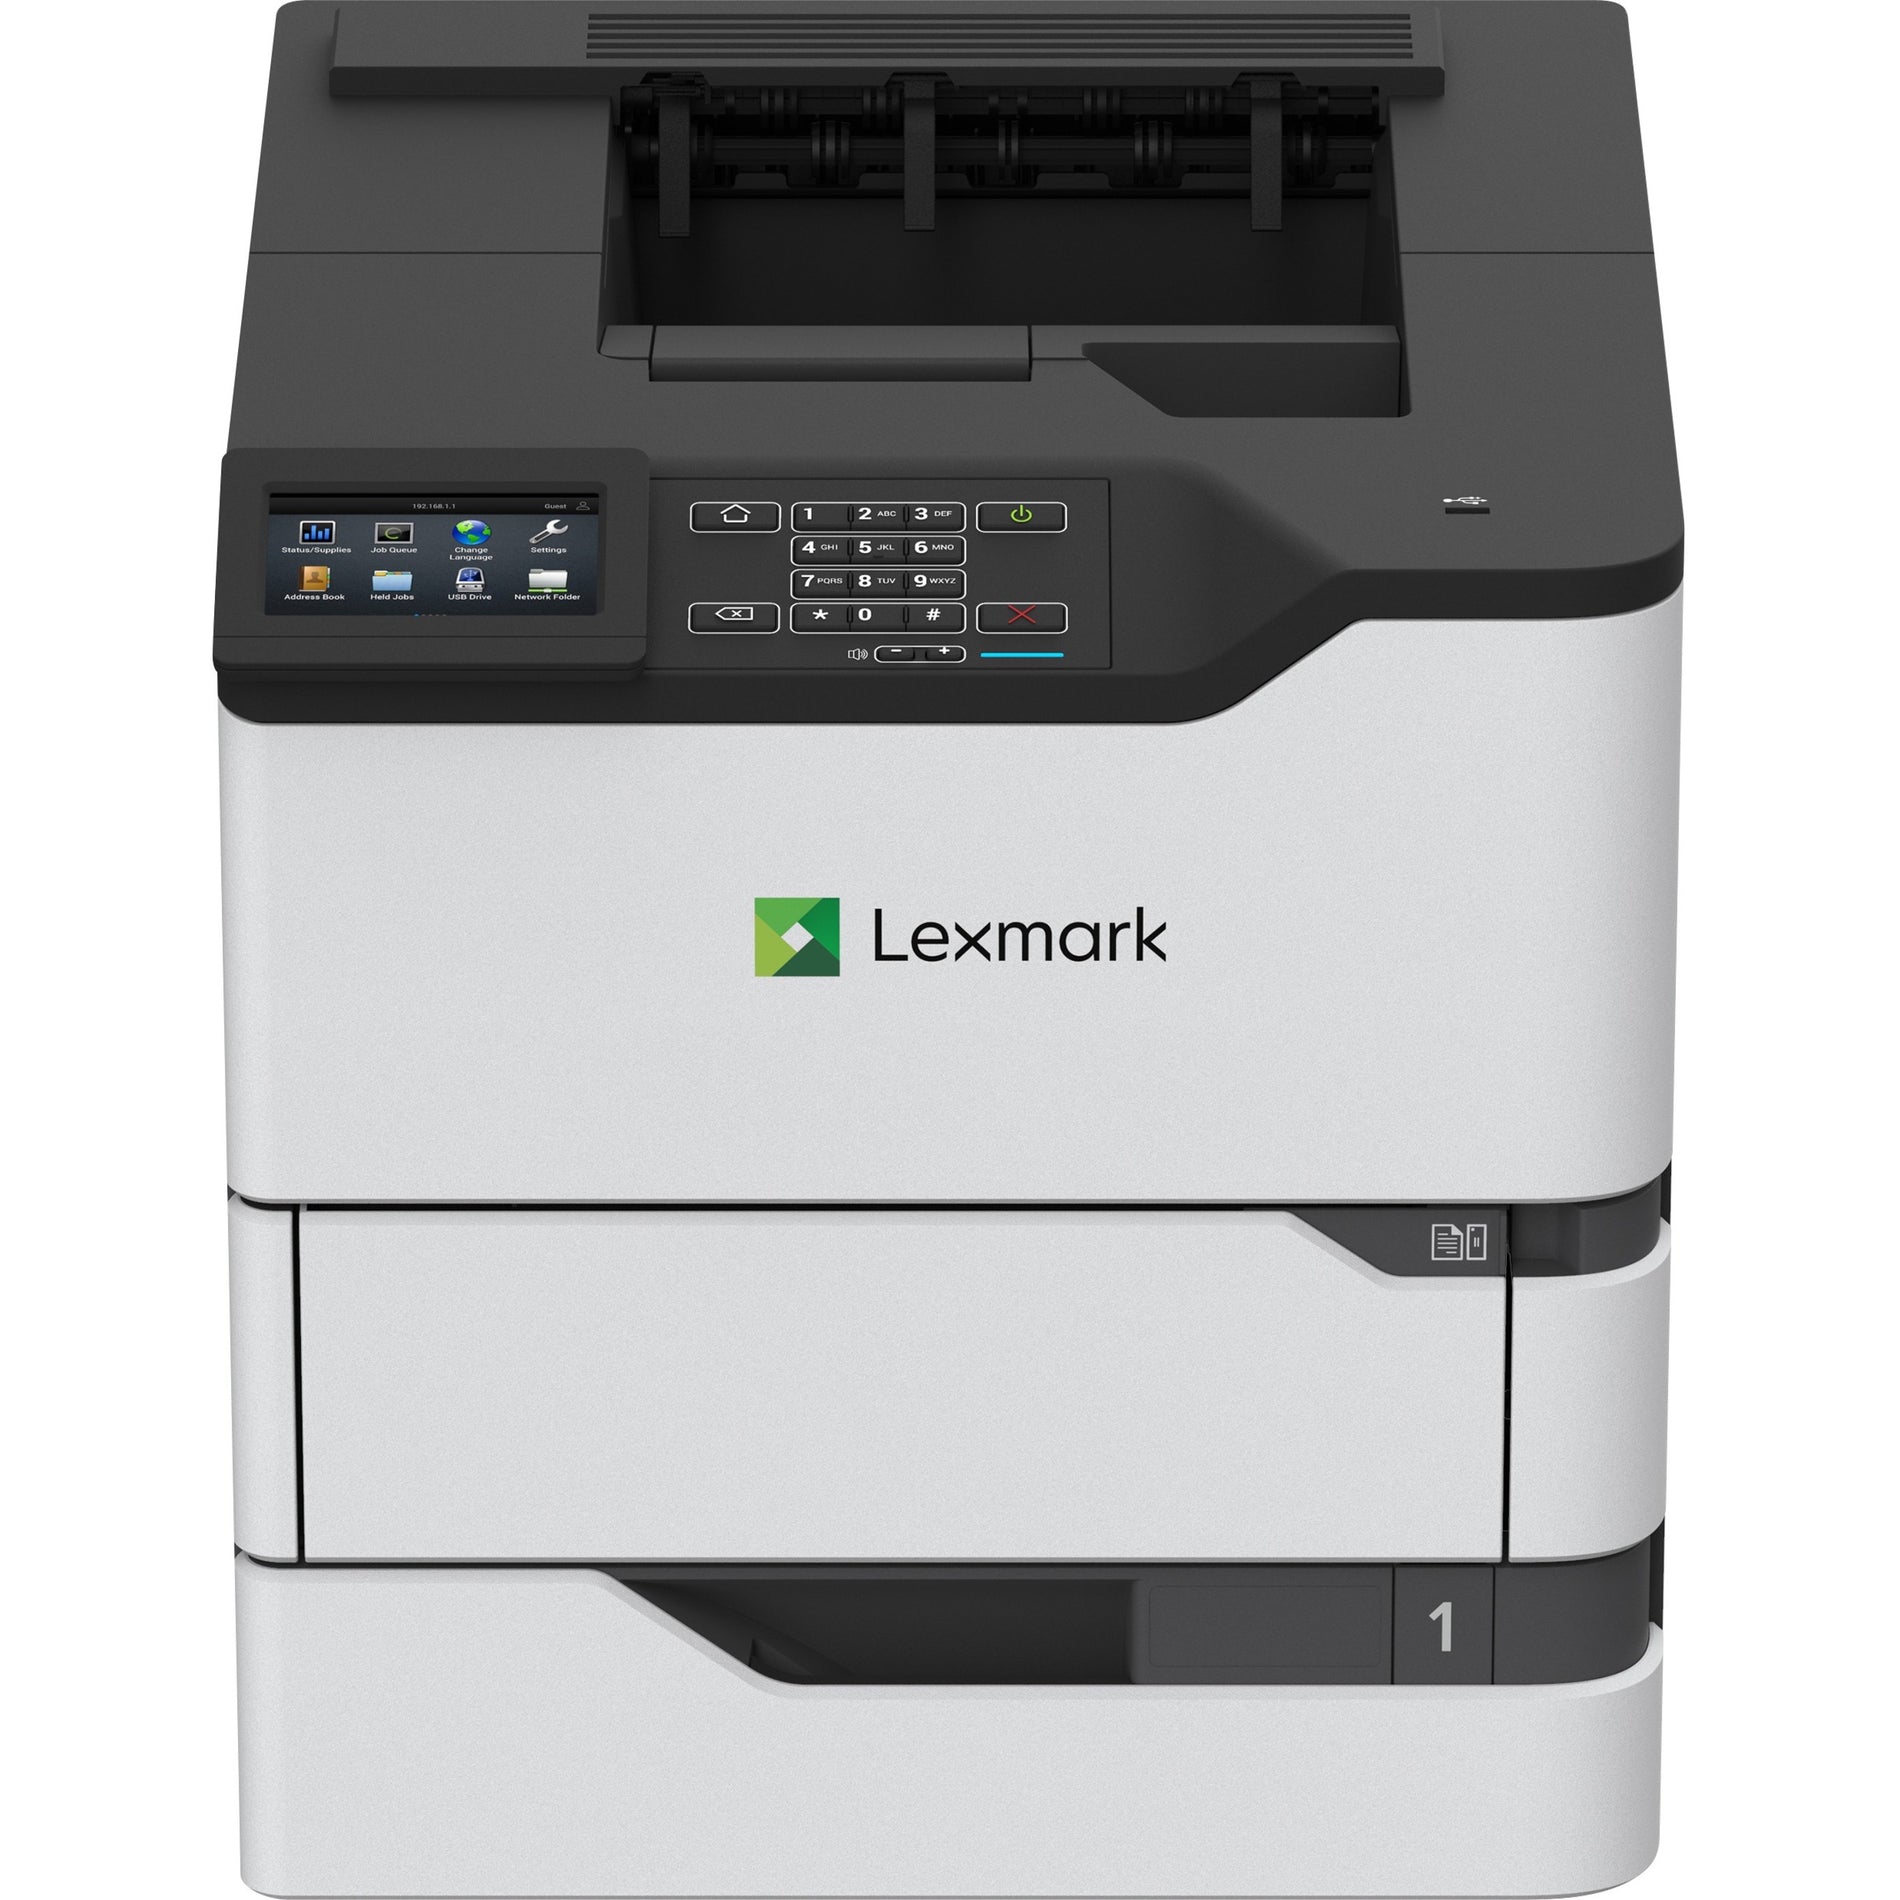 Lexmark 50GT310 MS826de デスクトップレーザープリンター - モノクロ、70 ppm、1200 x 1200 dpi、自動両面印刷 ブランド名：Lexmark Lexmarkを翻訳：レックスマーク